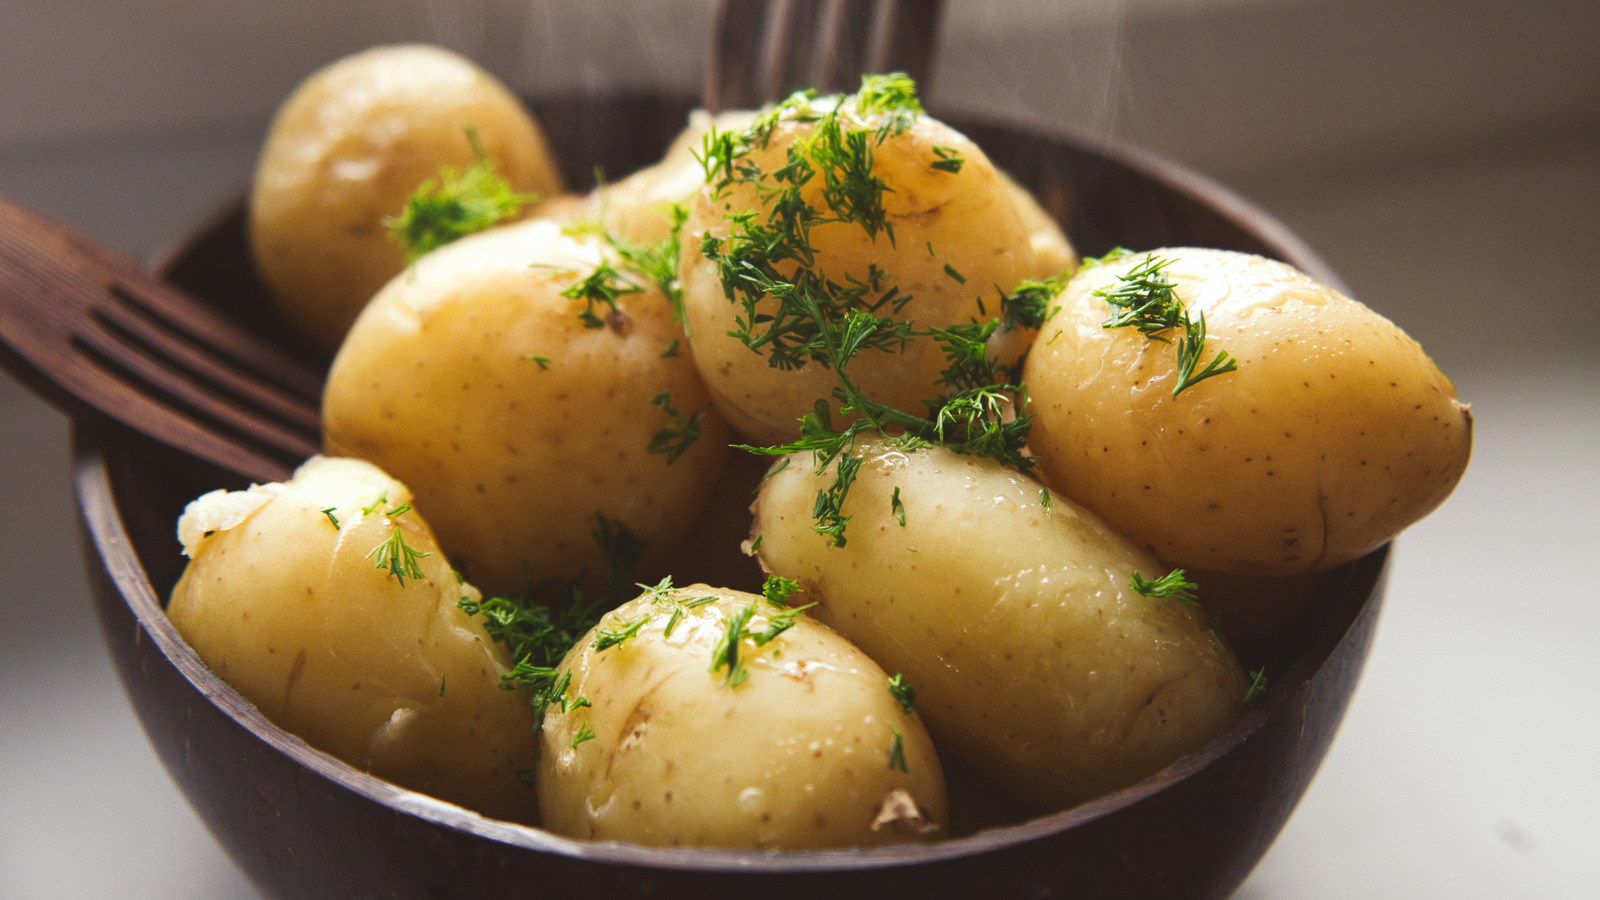 Can i steam potatoes for potato salad фото 7